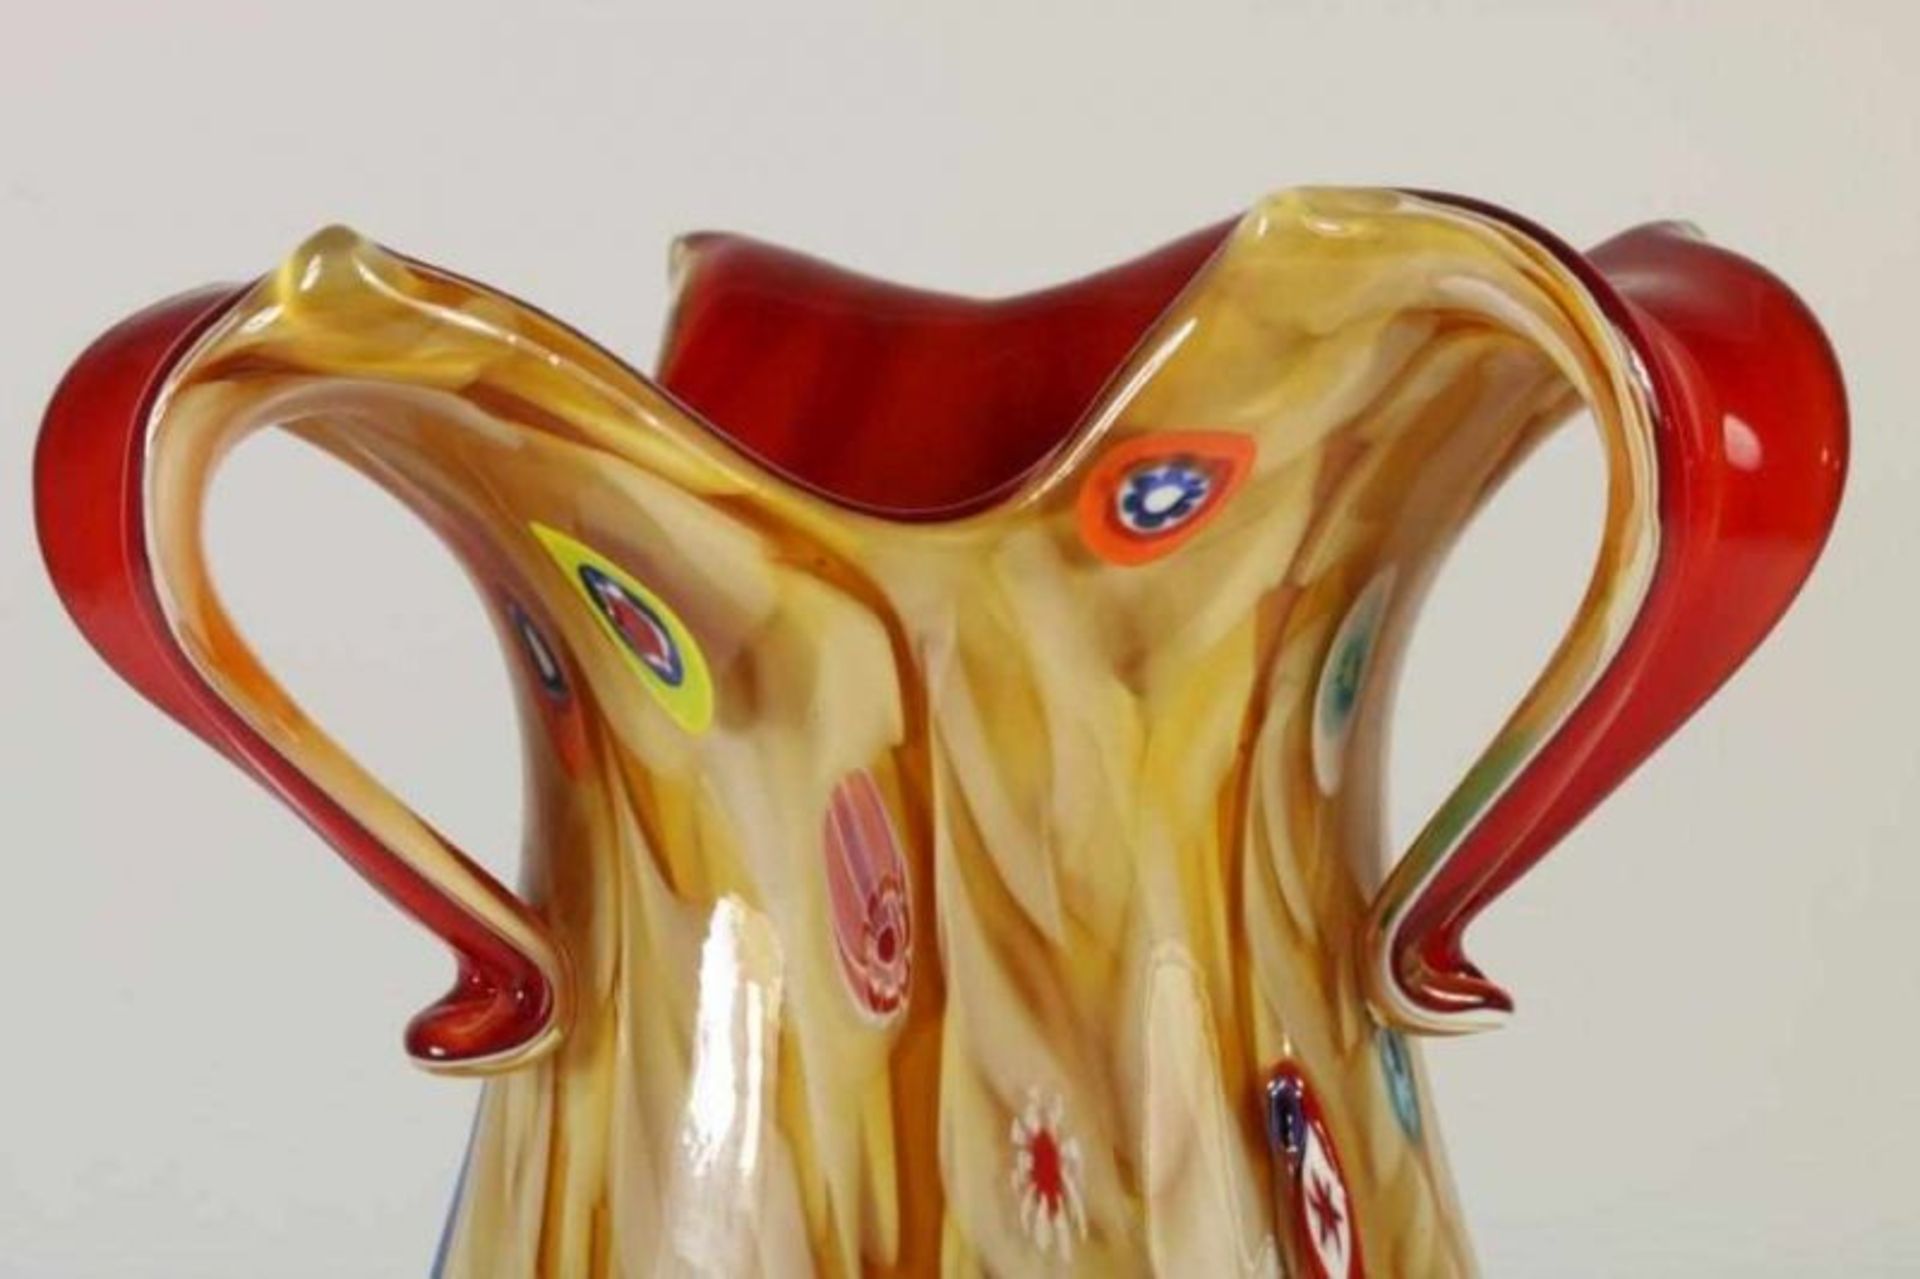 Polychroom dik glazen vaas, h. 40 cm. Polychrome glass vase, h. 40 cm. - Bild 4 aus 4